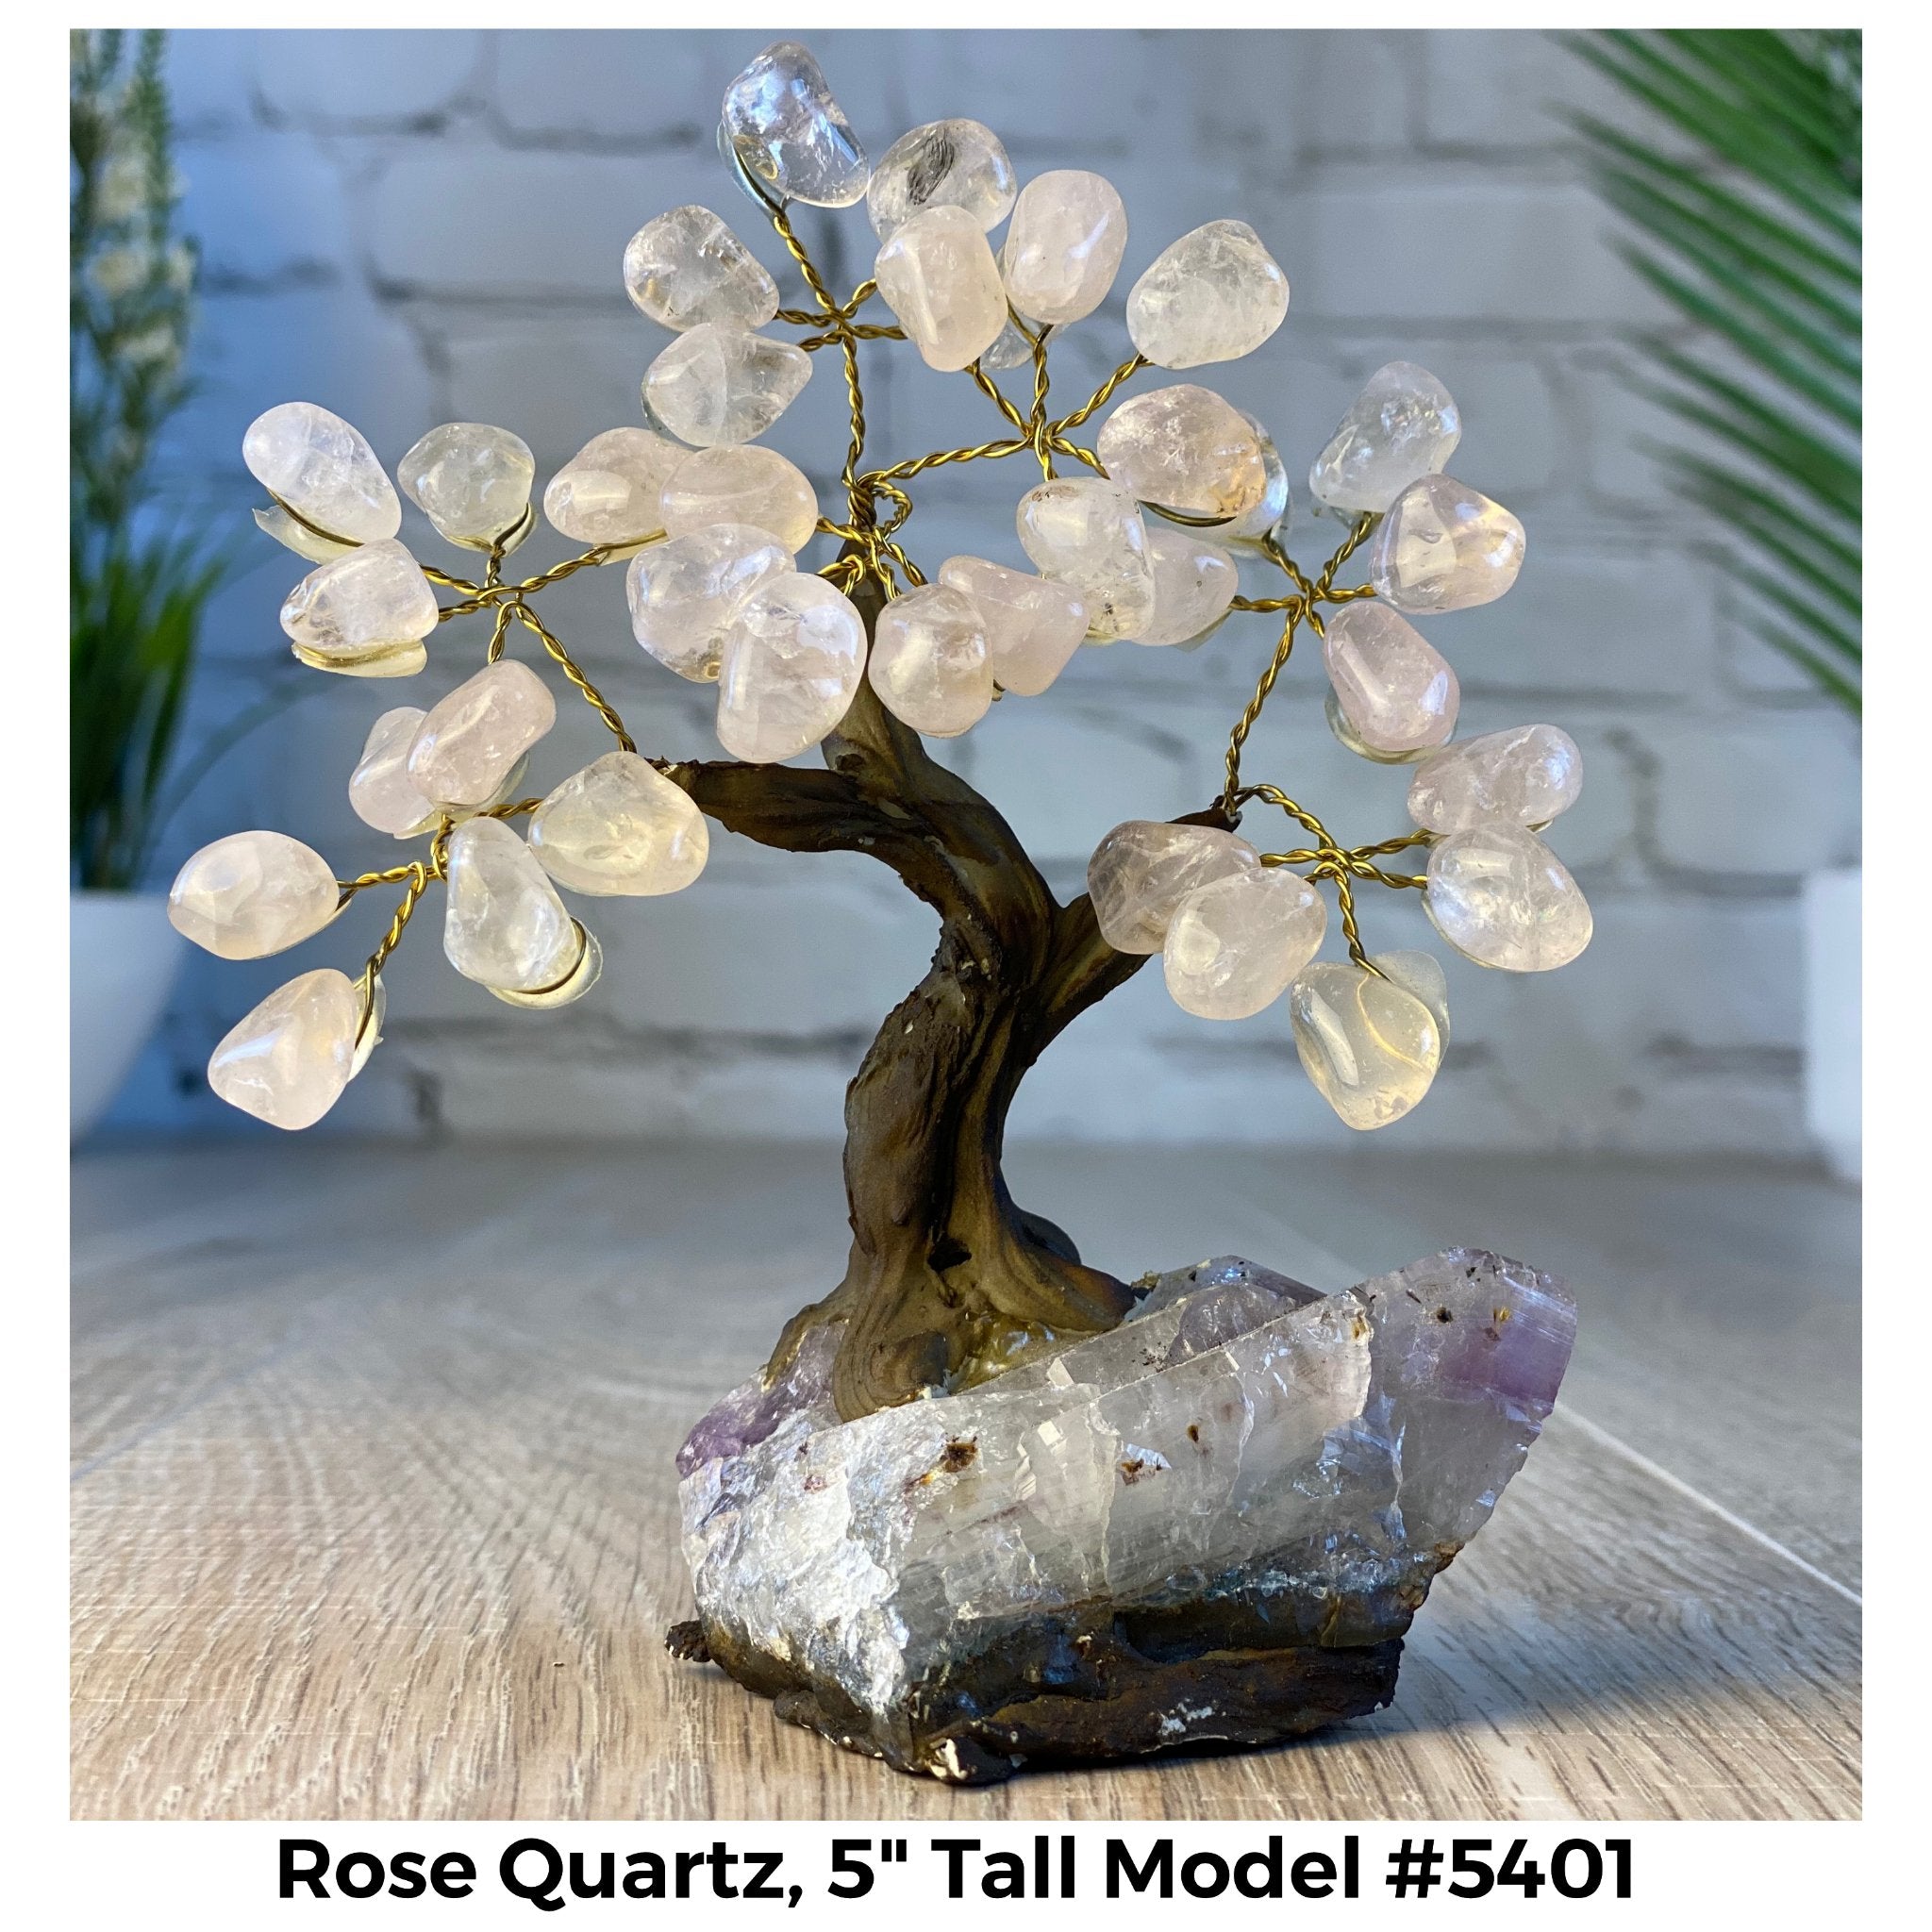 Rose Quartz 5" Tall Handmade Gemstone Tree on a Crystal base, 35 Gems #5401ROSQ - Brazil GemsBrazil GemsRose Quartz 5" Tall Handmade Gemstone Tree on a Crystal base, 35 Gems #5401ROSQGemstone Trees5401ROSQ